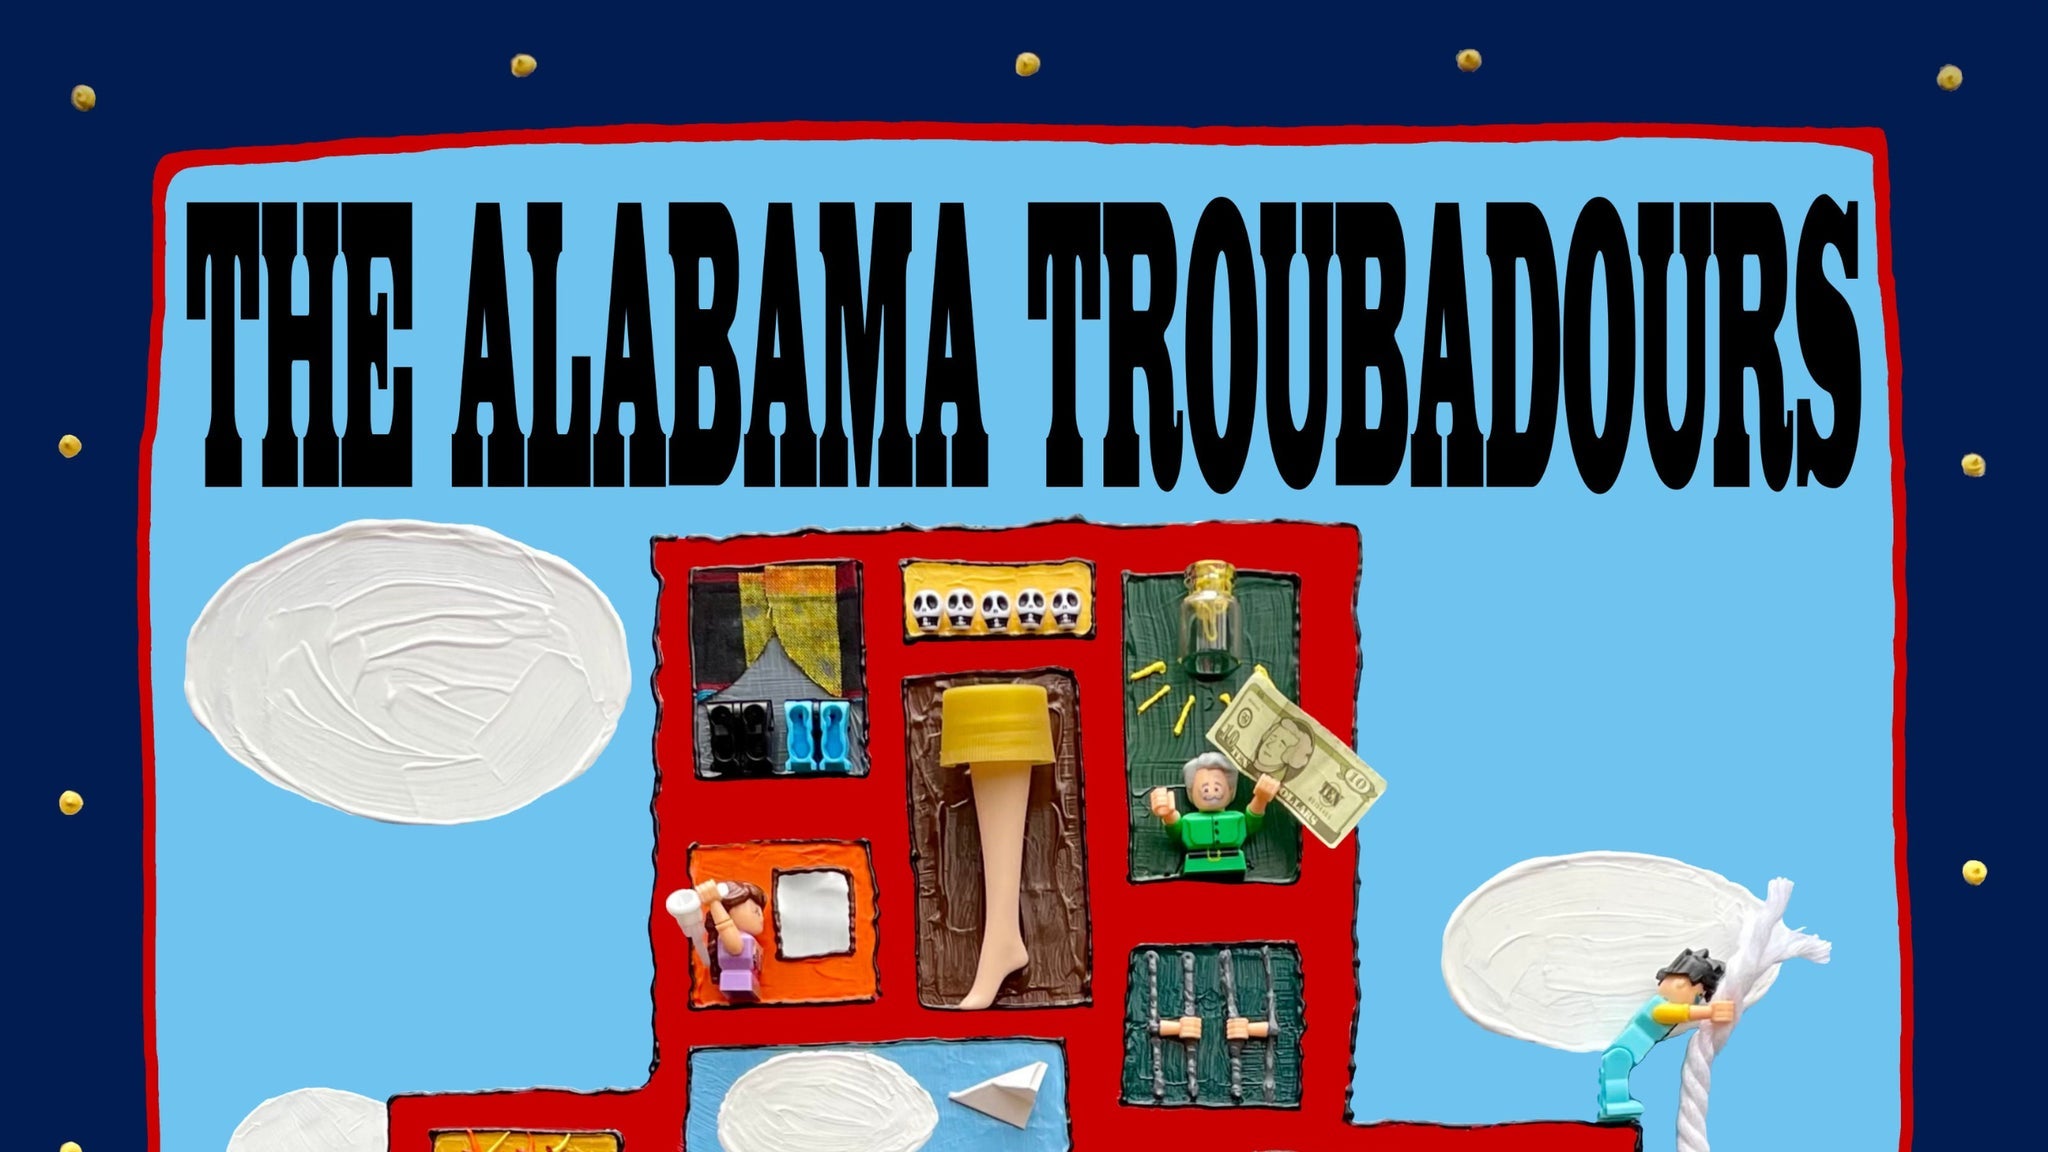 The Alabama Troubadours - Celebrating John Prine